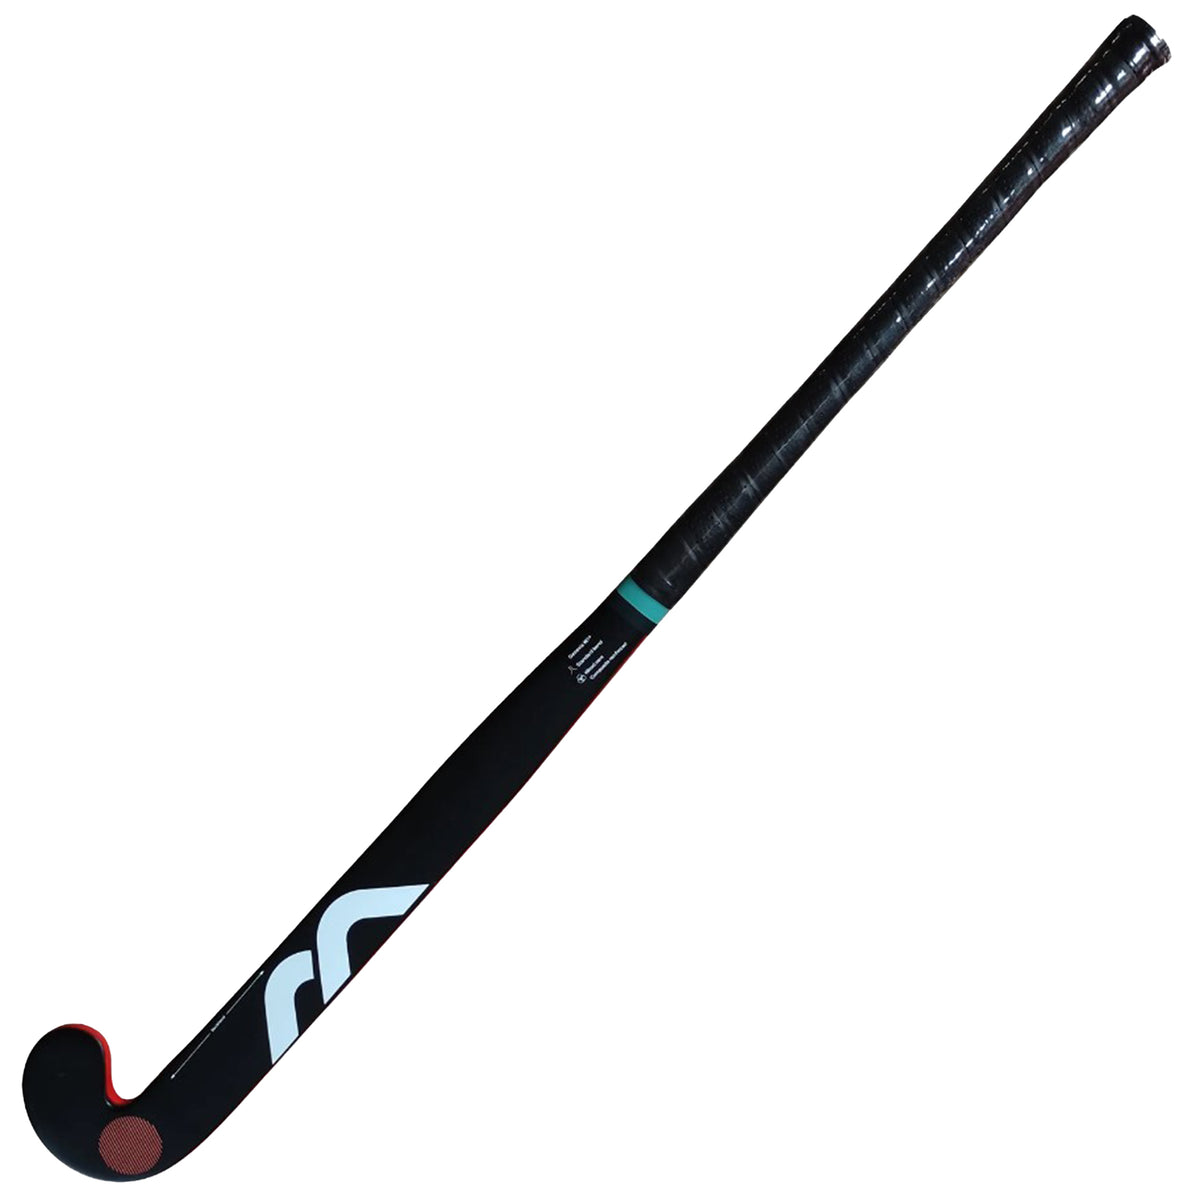 Mercian Gensis W1+ Junior Wooden Hockey Stick